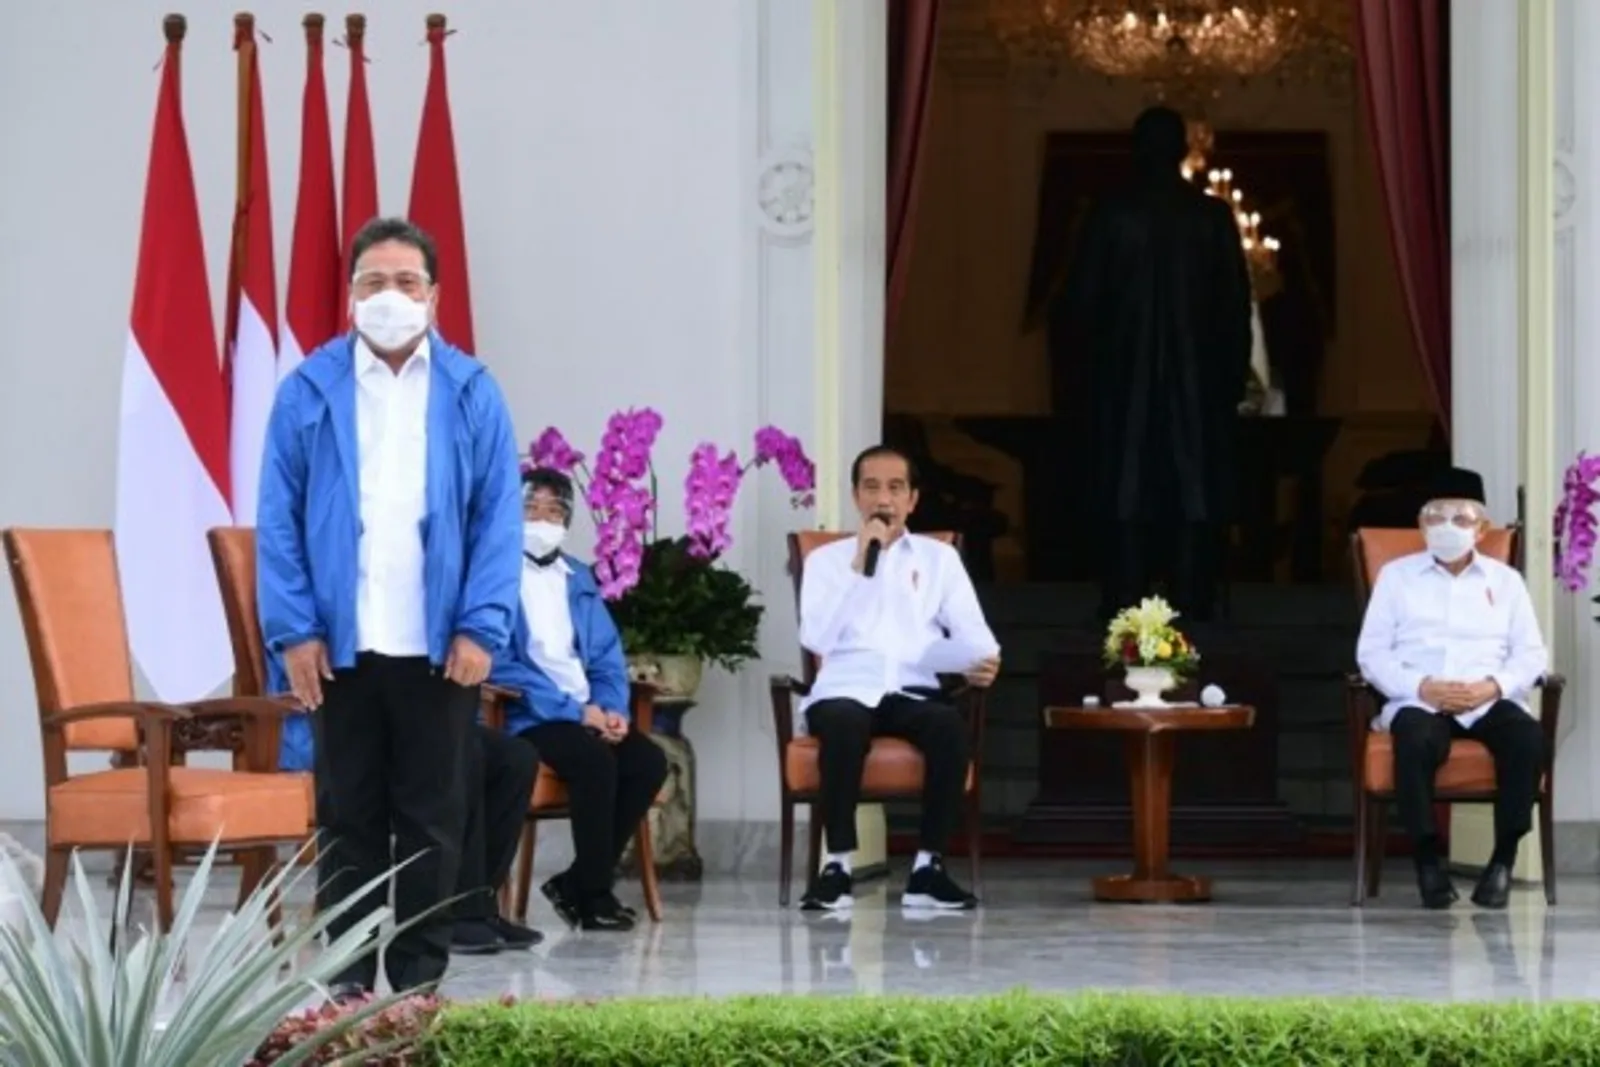 Bocoran Brand dan Makna Jaket yang Dipakai Menteri Baru Jokowi